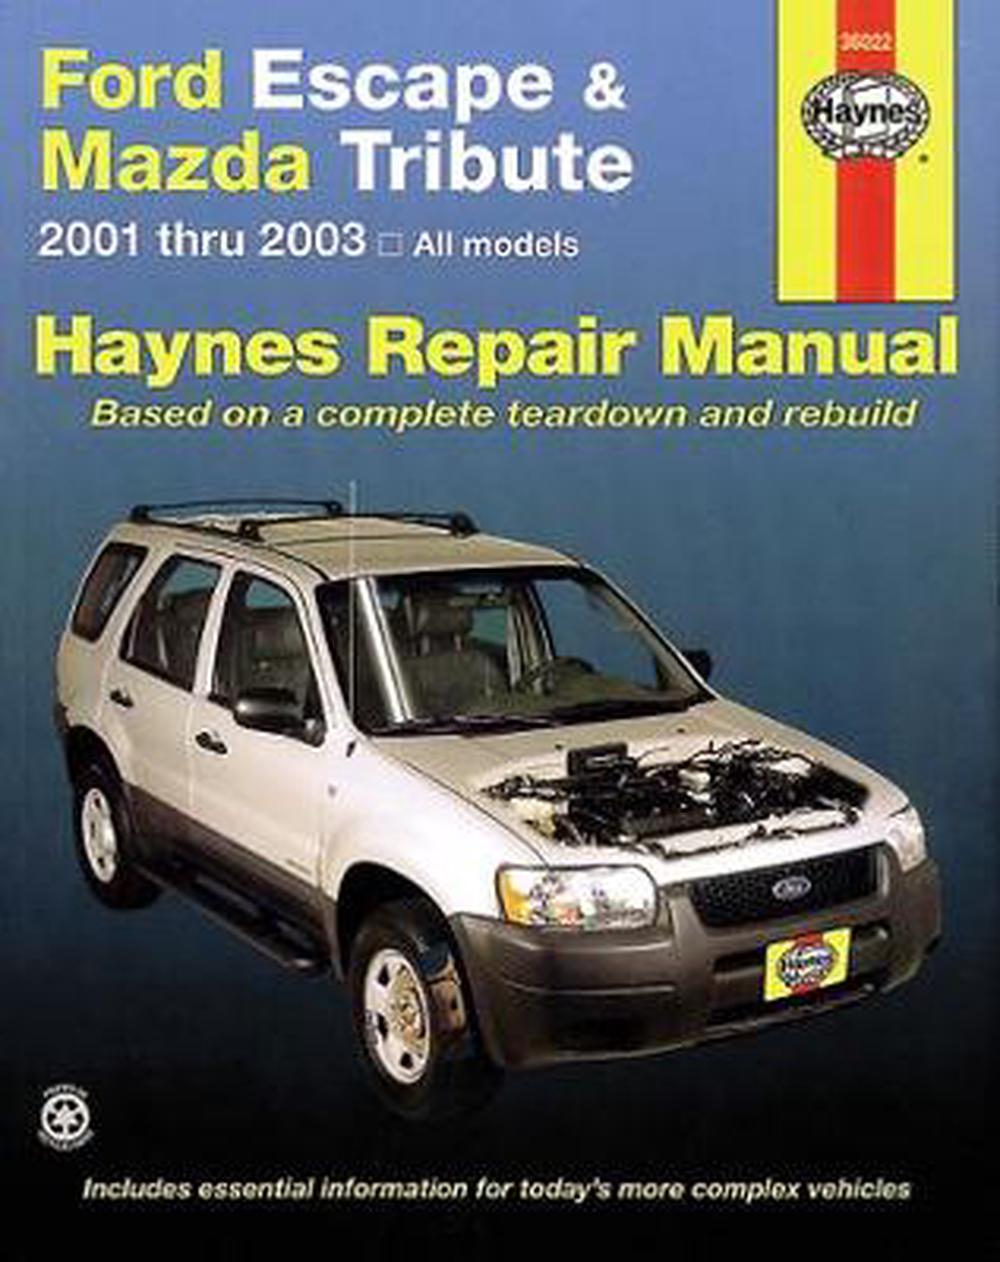 Haynes Ford Escape, Mazda Tribute & Mercury Mariner Automotive Repair